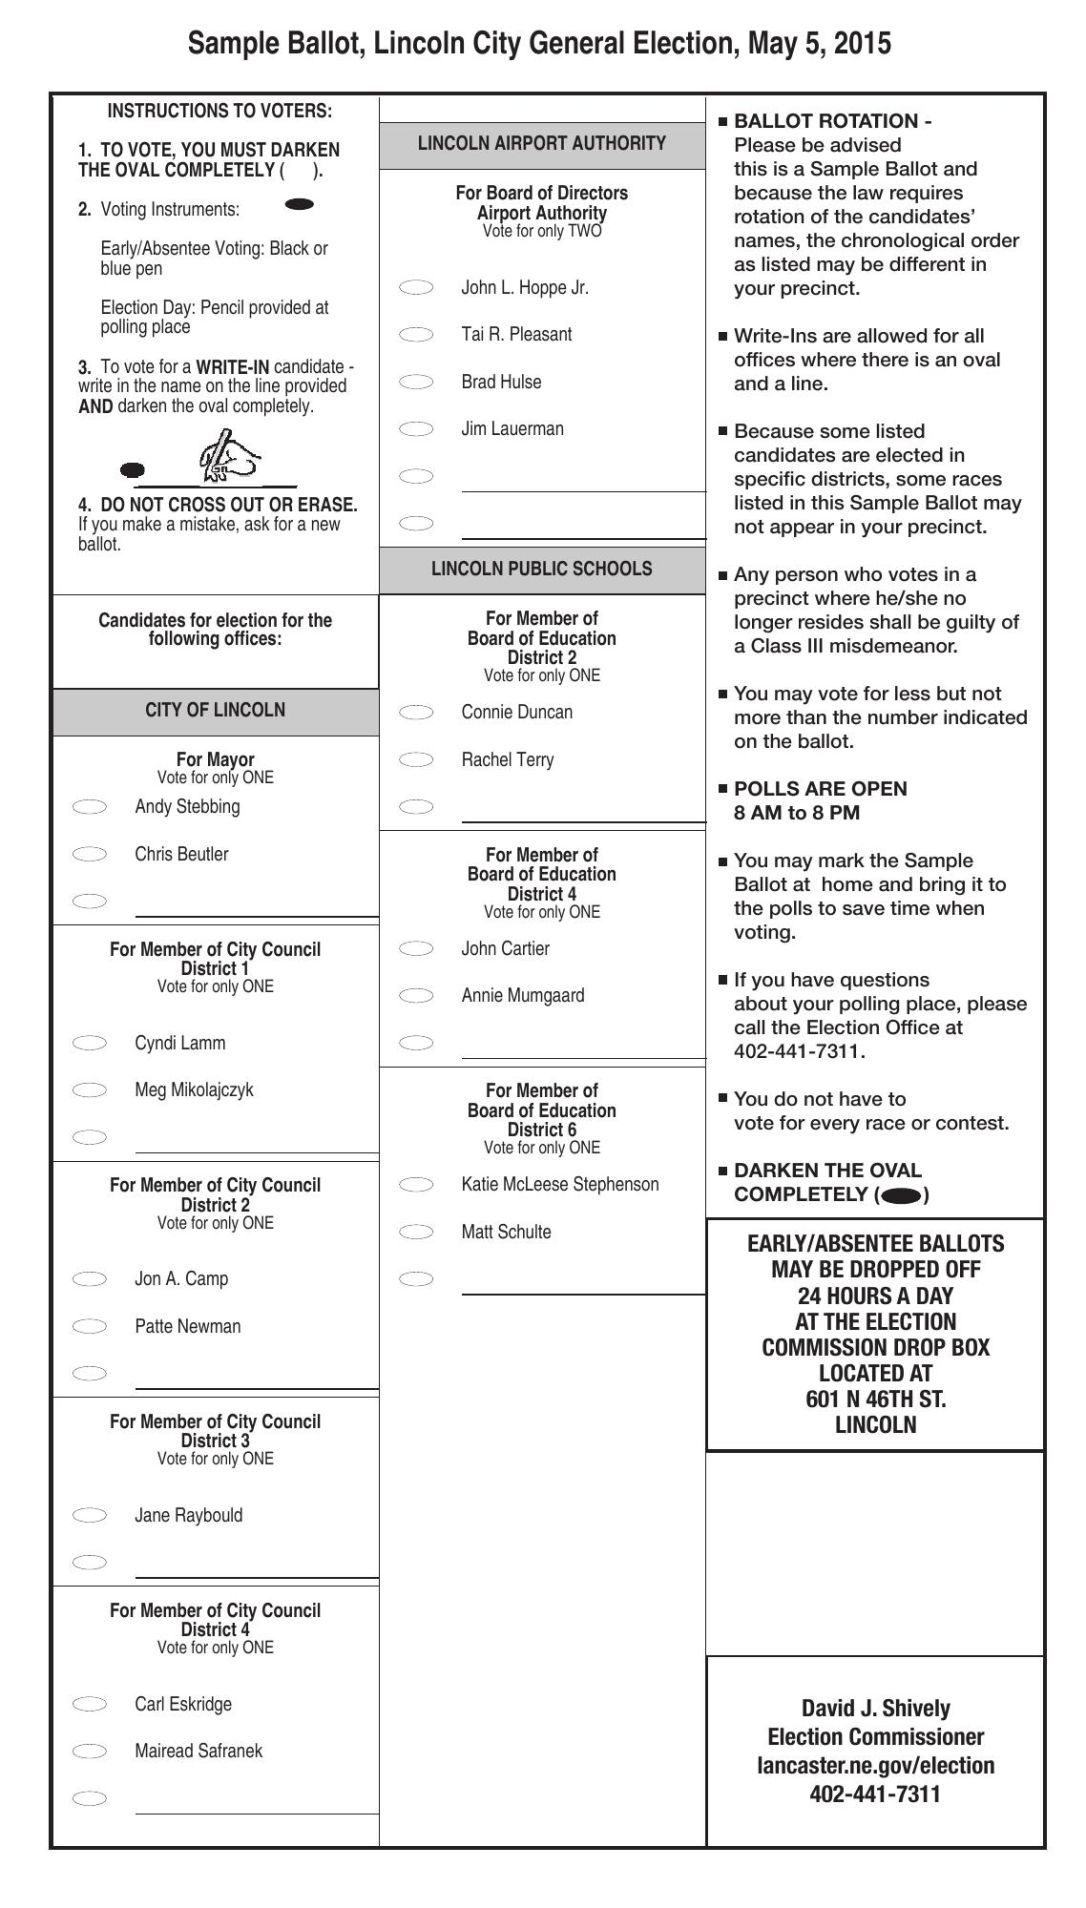 Lincoln City General Election sample ballot, May 5, 2015 | Elections ...